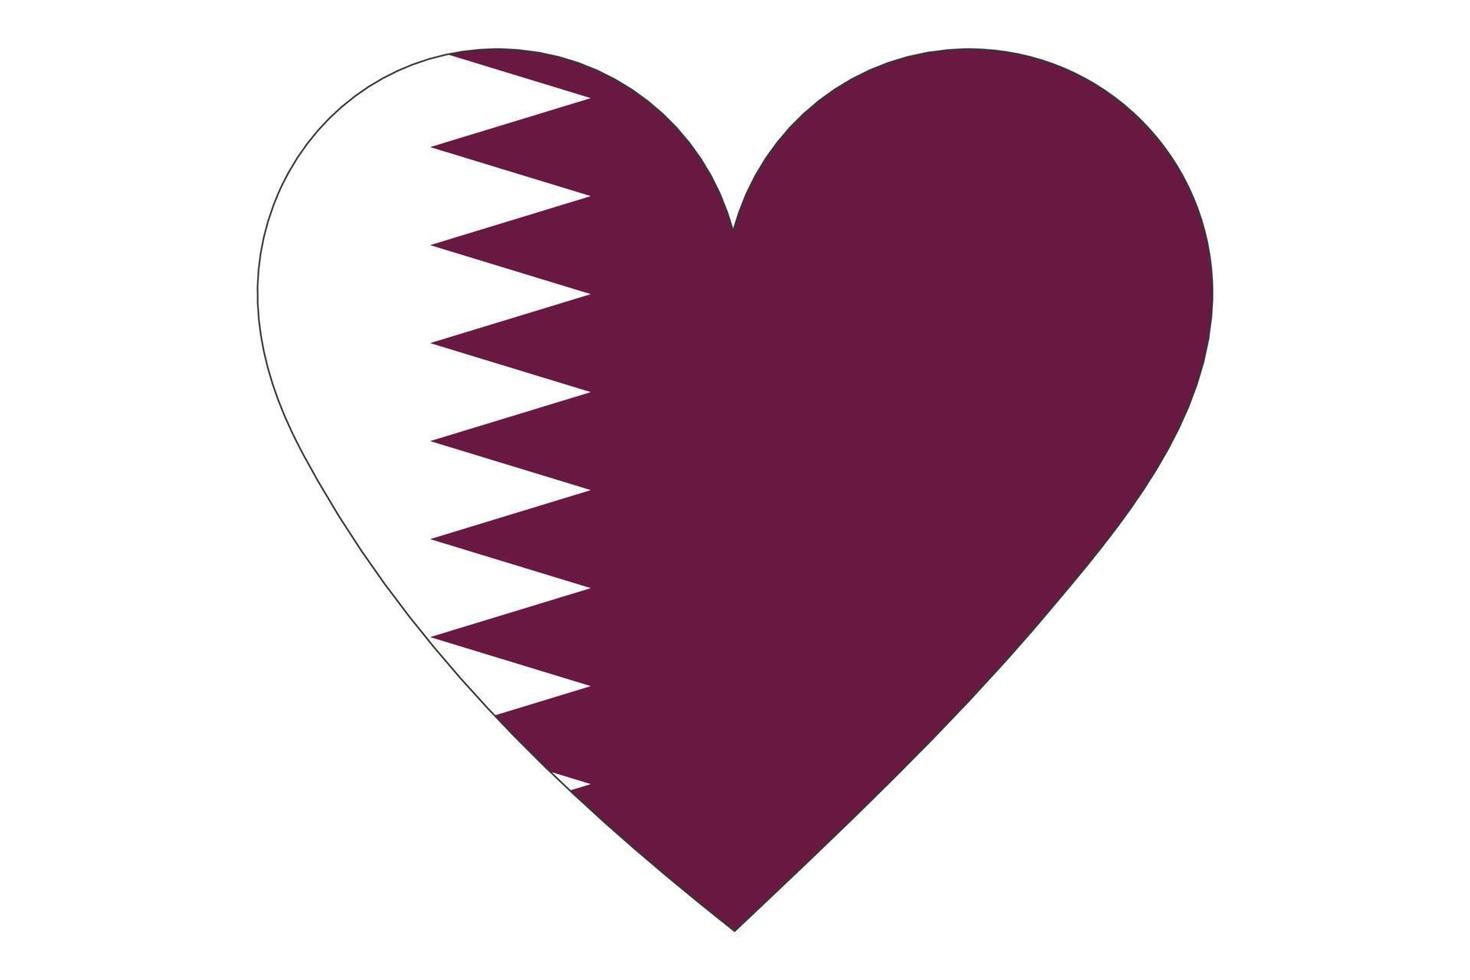 Heart flag vector of Qatar on white background.